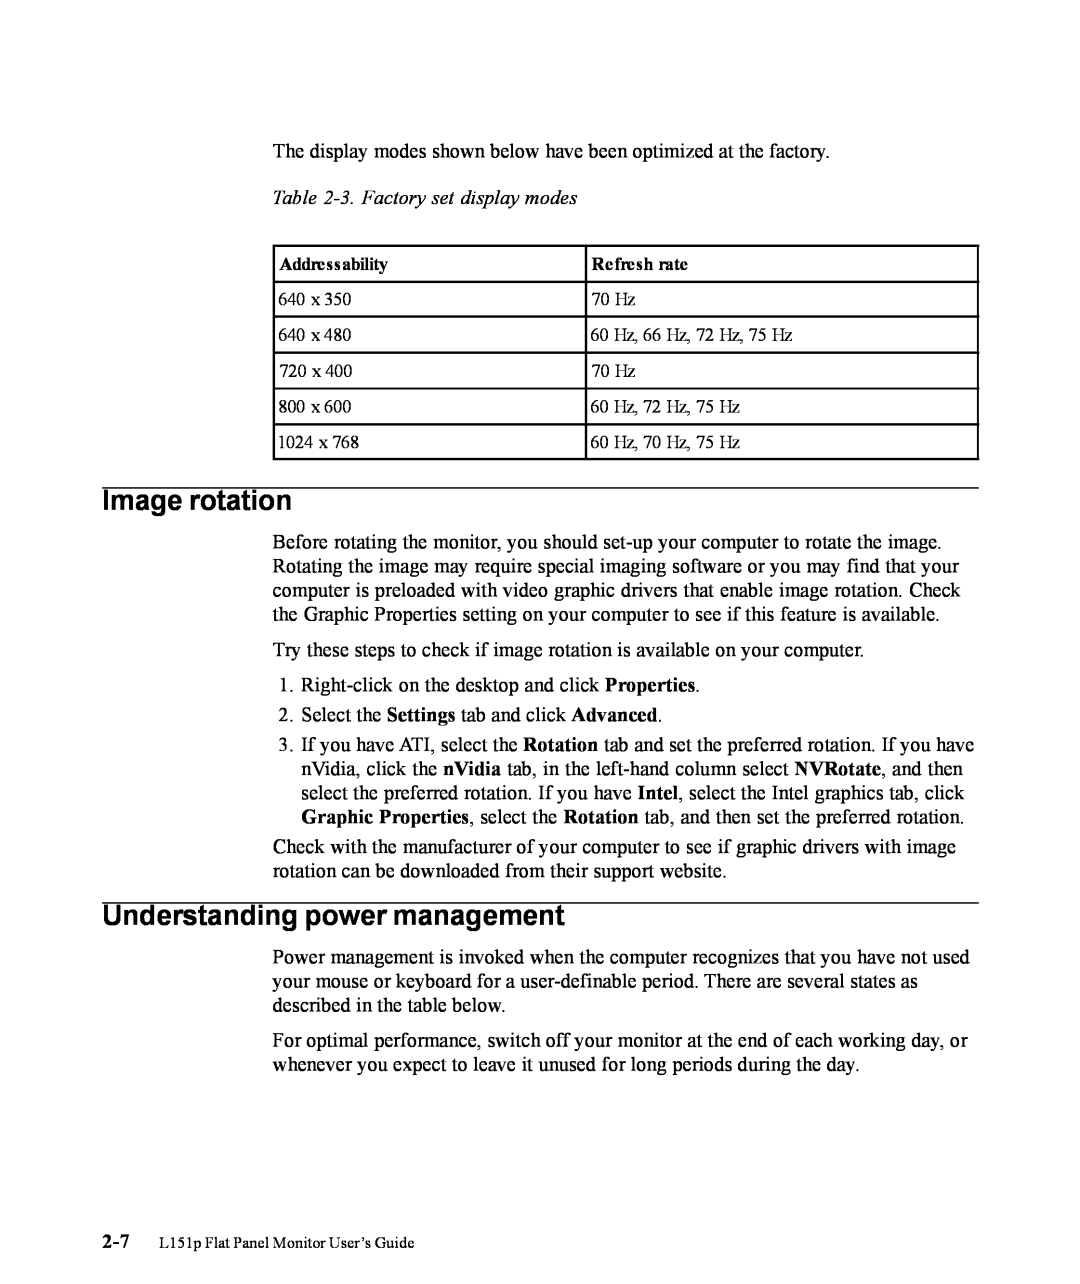 Lenovo 9205-HG2 manual Image rotation, Understanding power management 